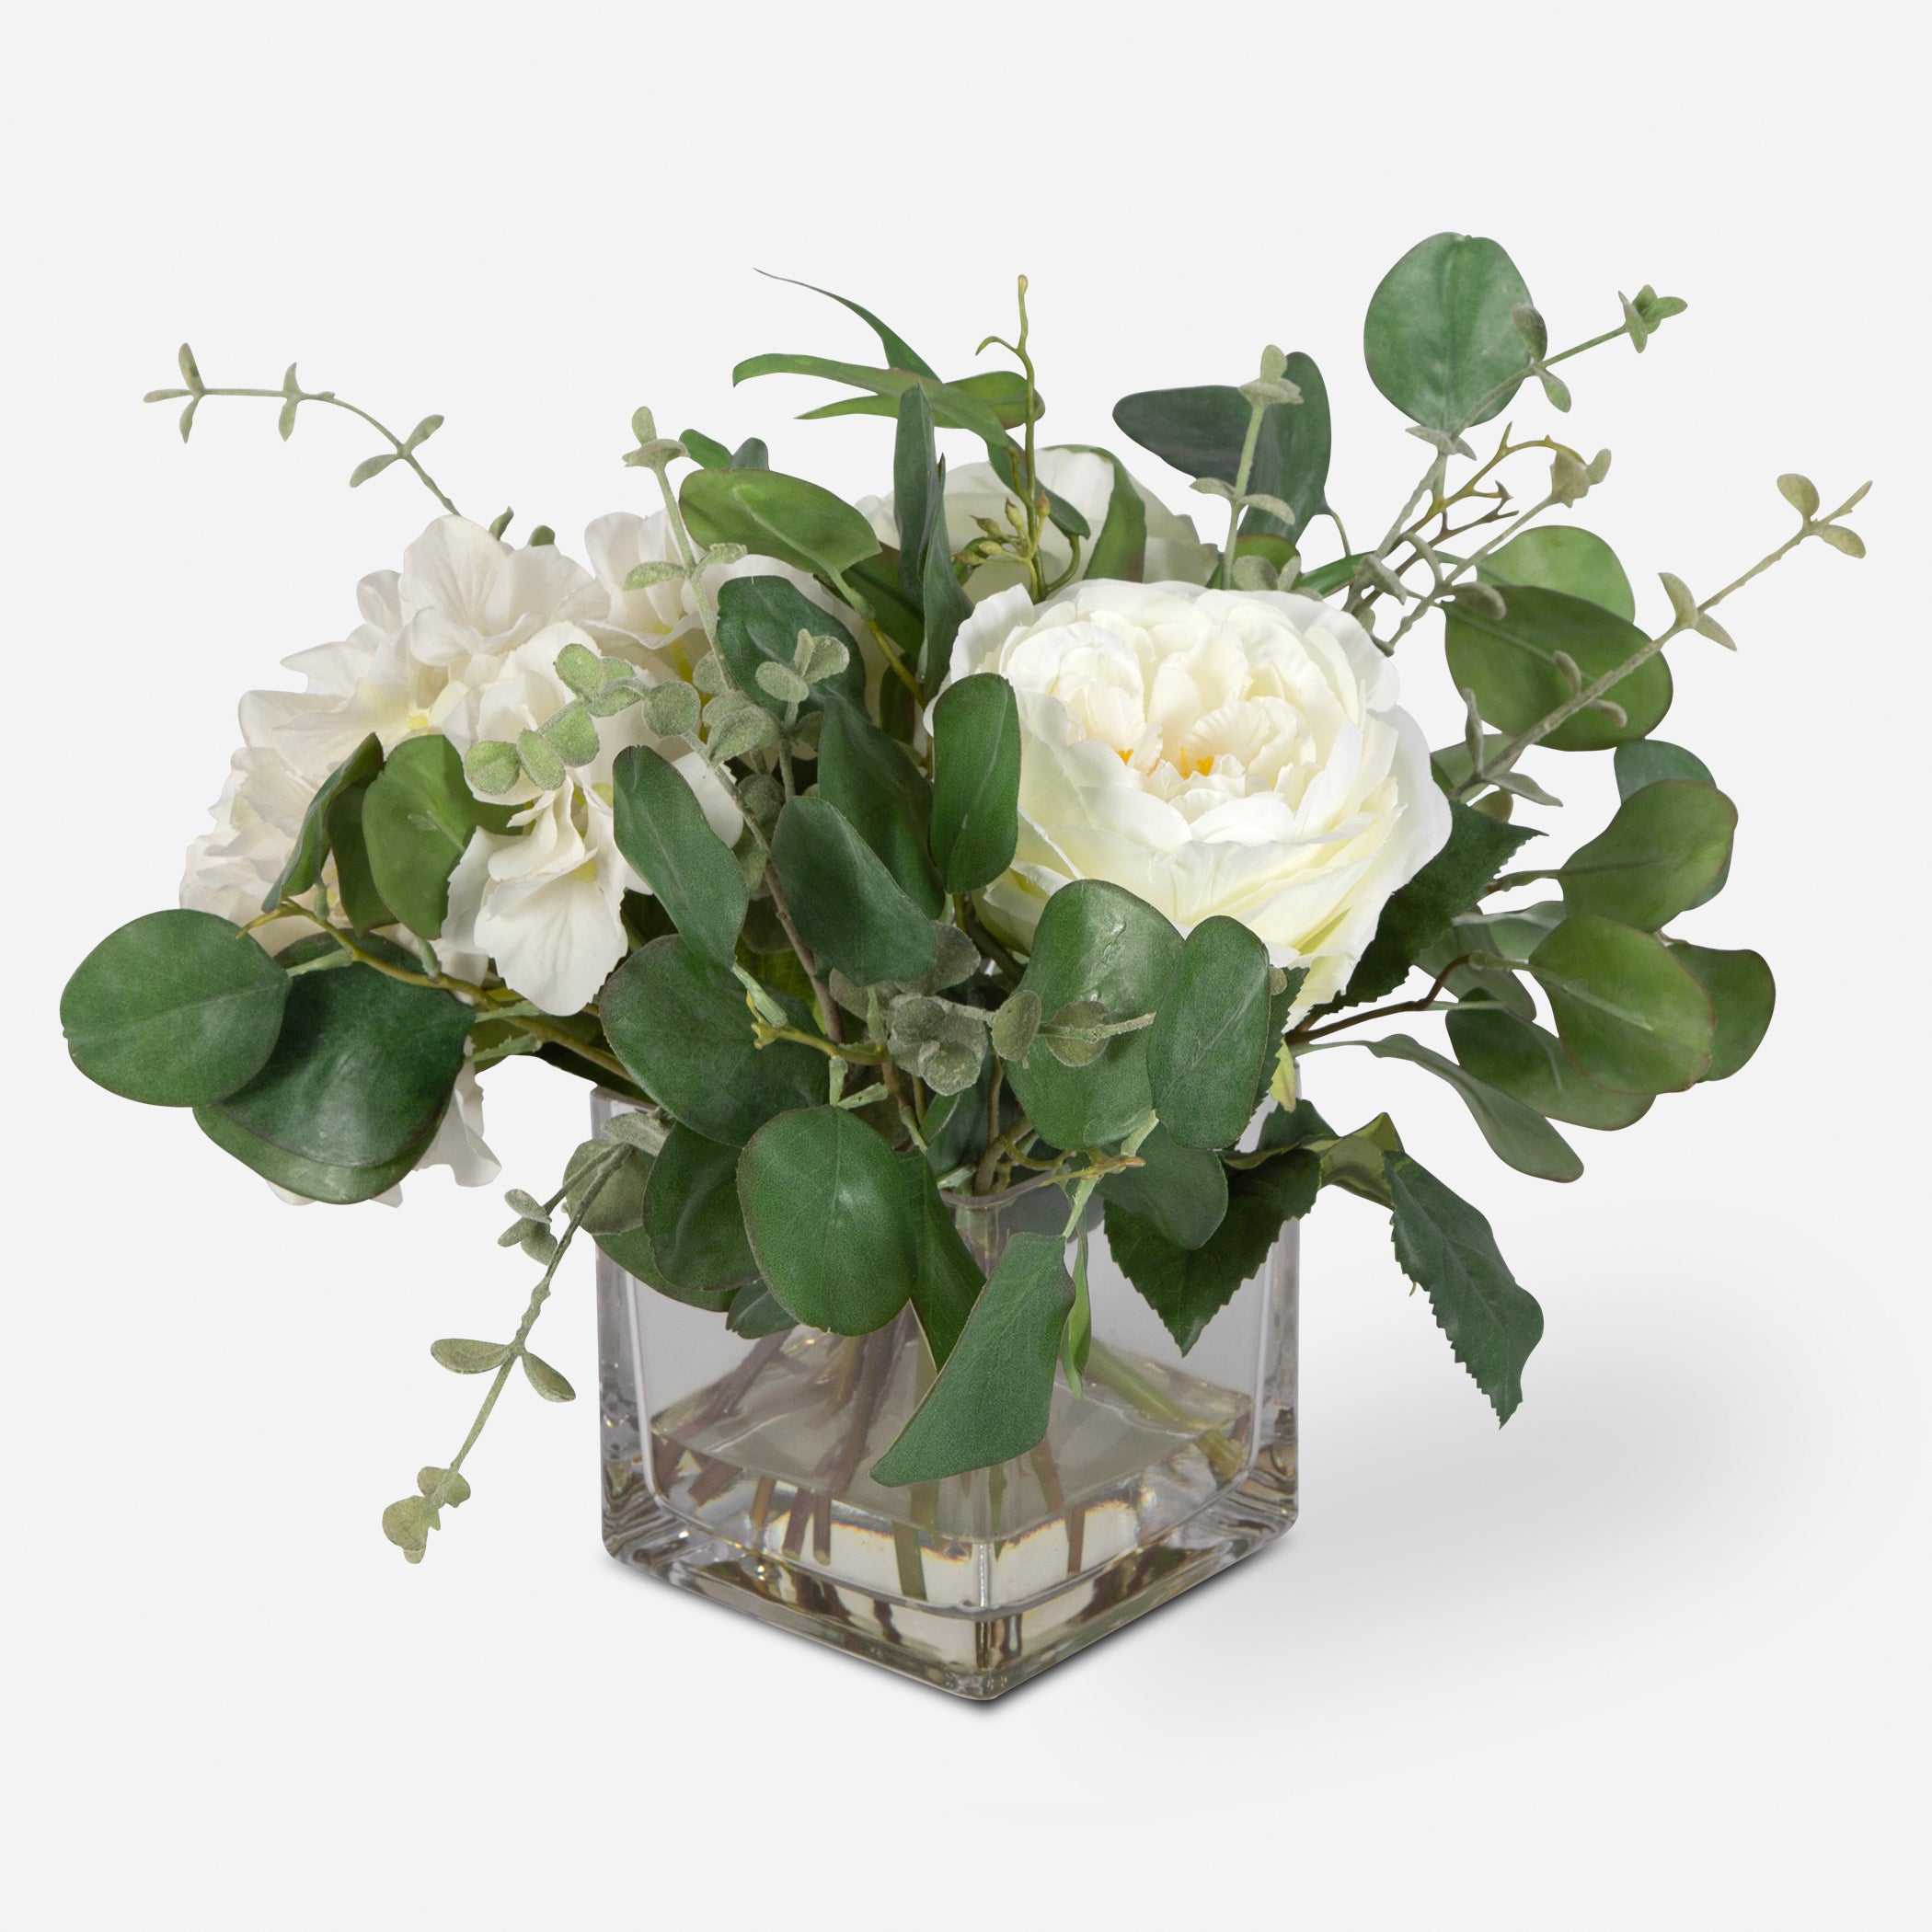 Uttermost Rosewood Artificial Flowers / Centerpiece